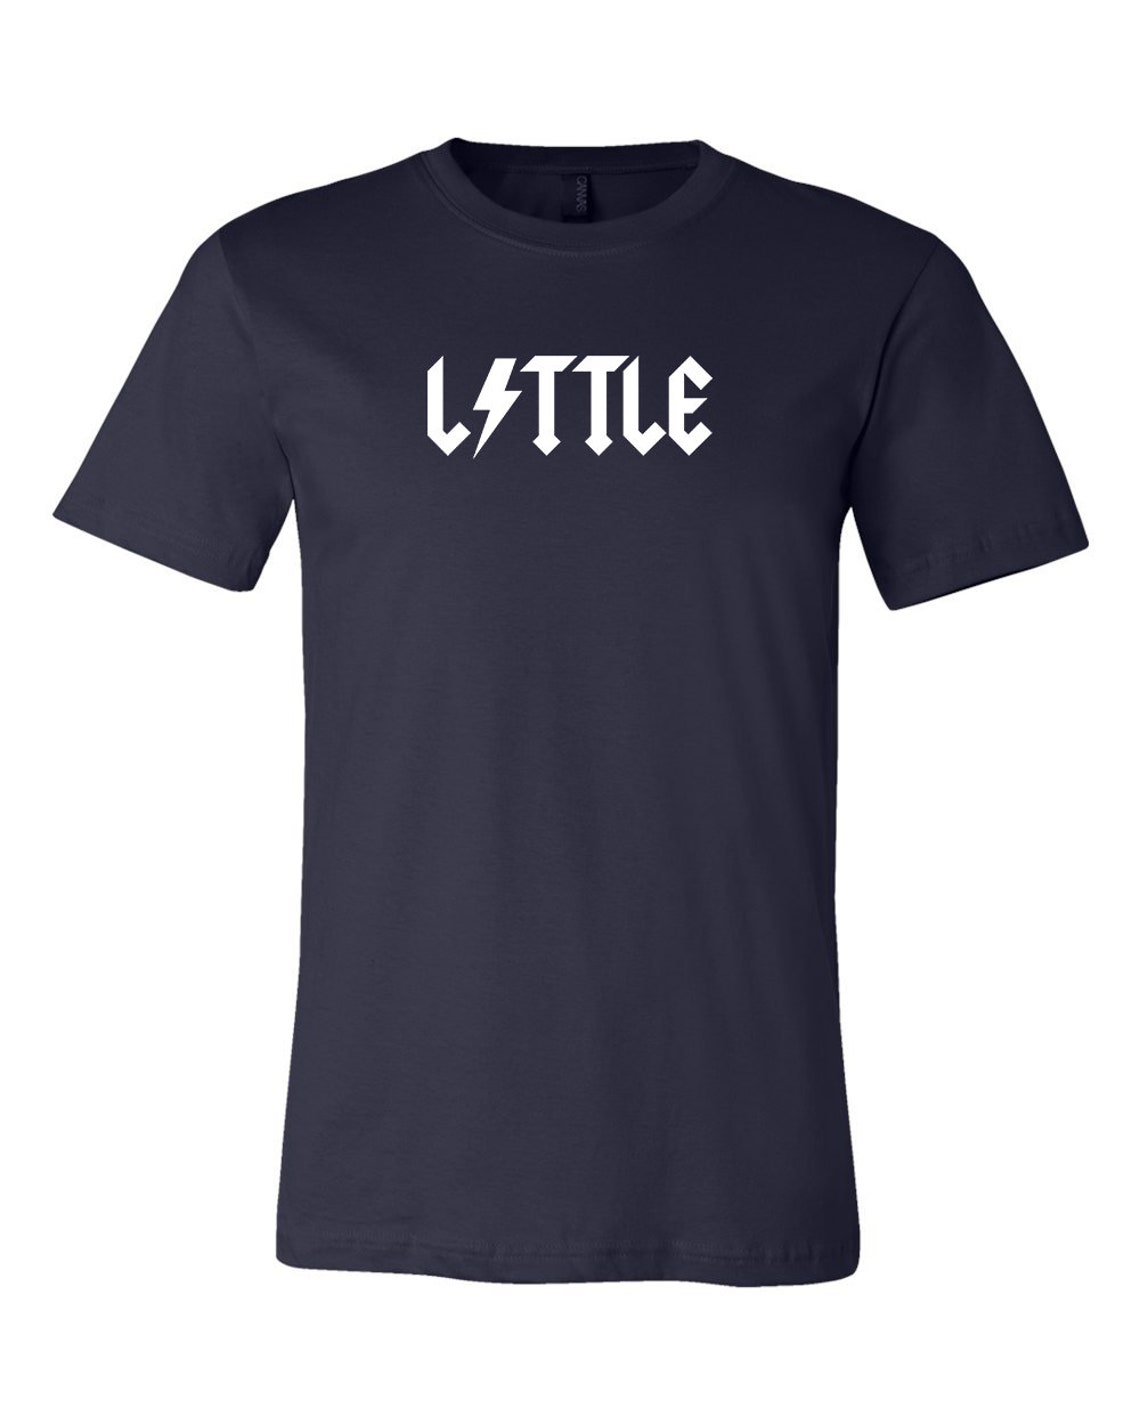 Big Little College Sorority shirts Rock font sorority reveal | Etsy